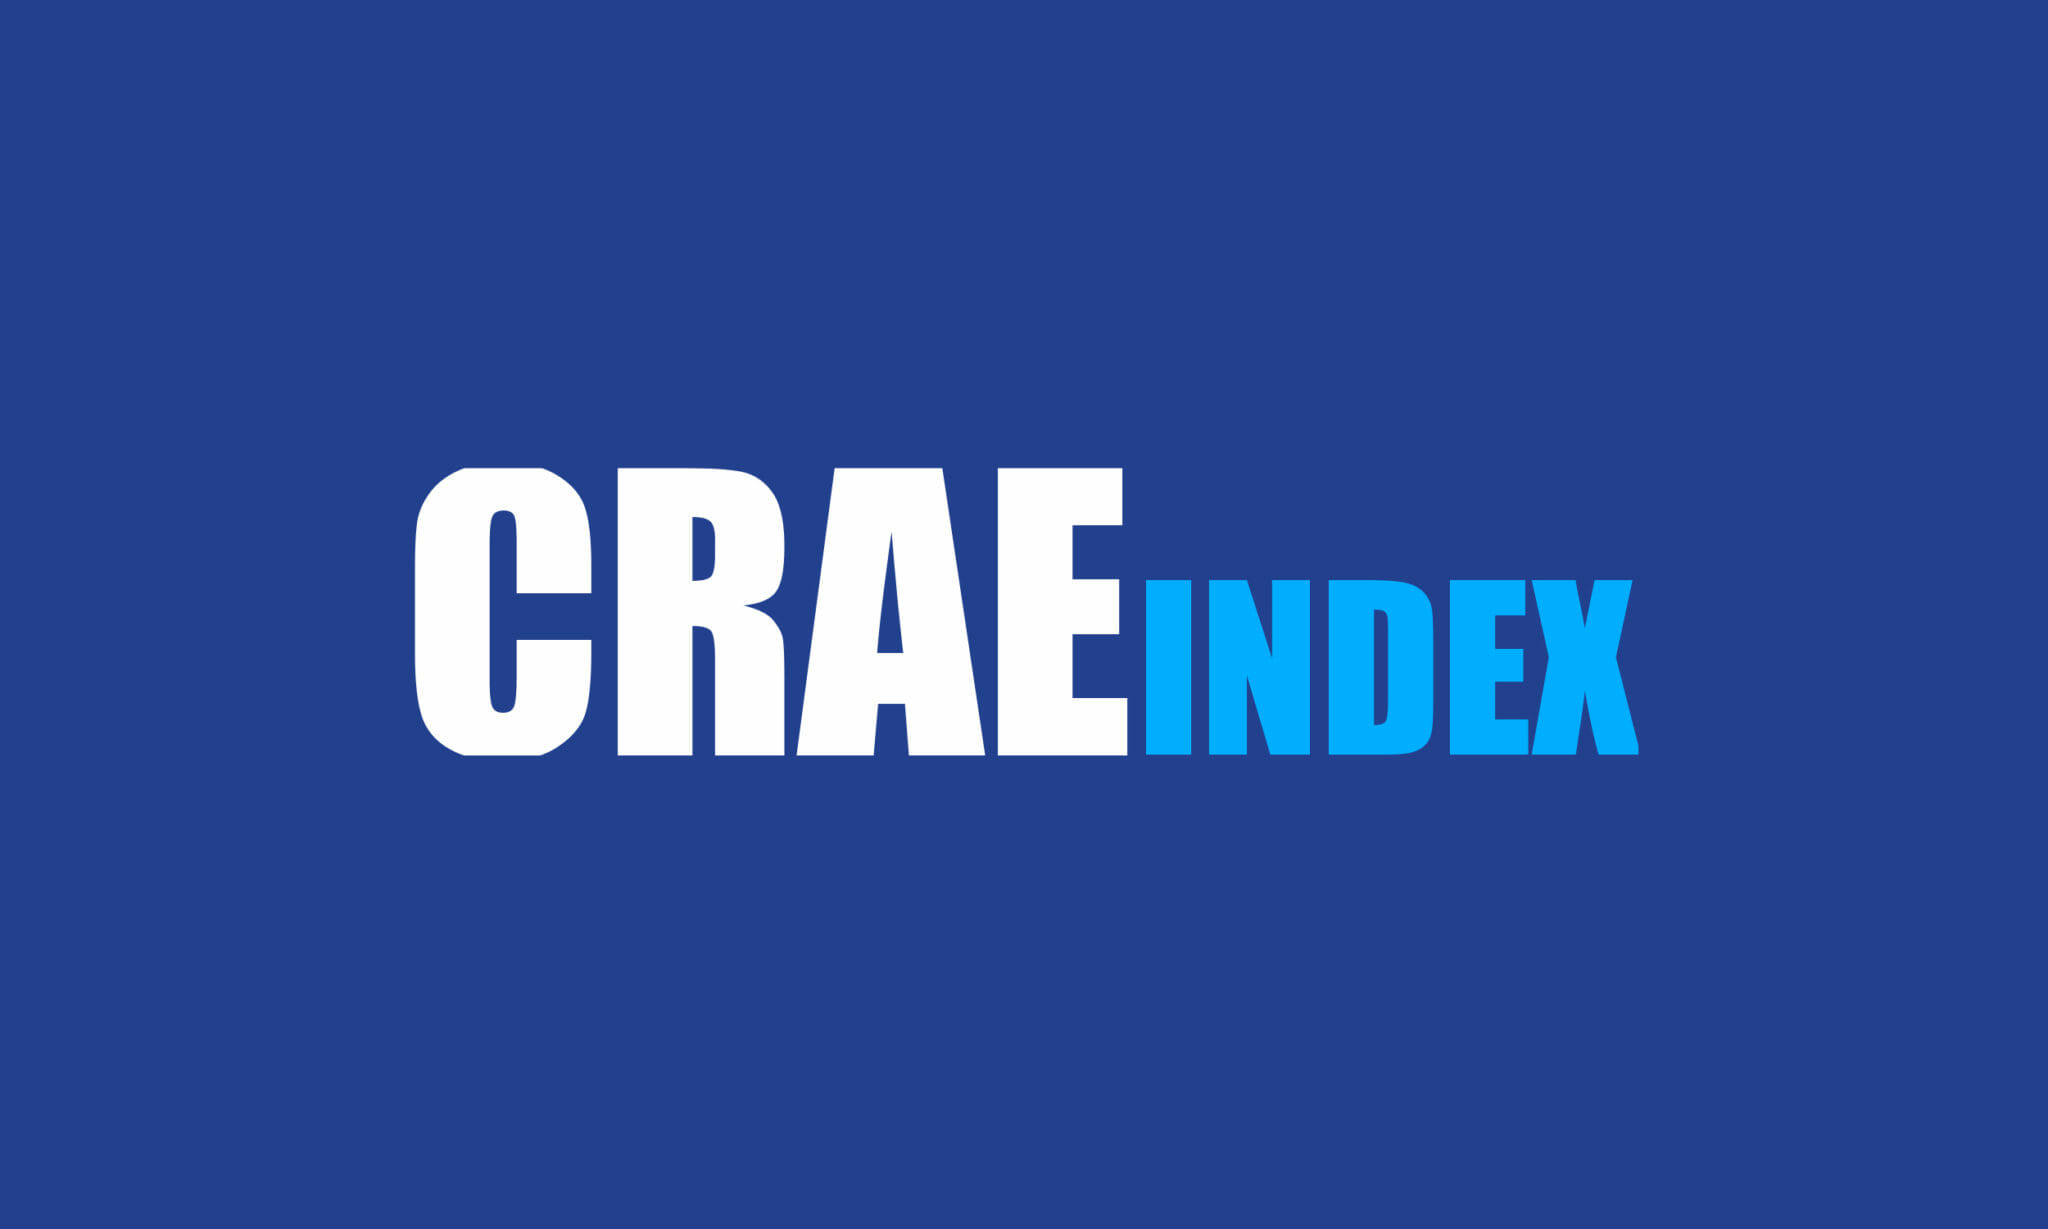 ‘Devastating’ impact: CRAE Index shows accelerating breach damage